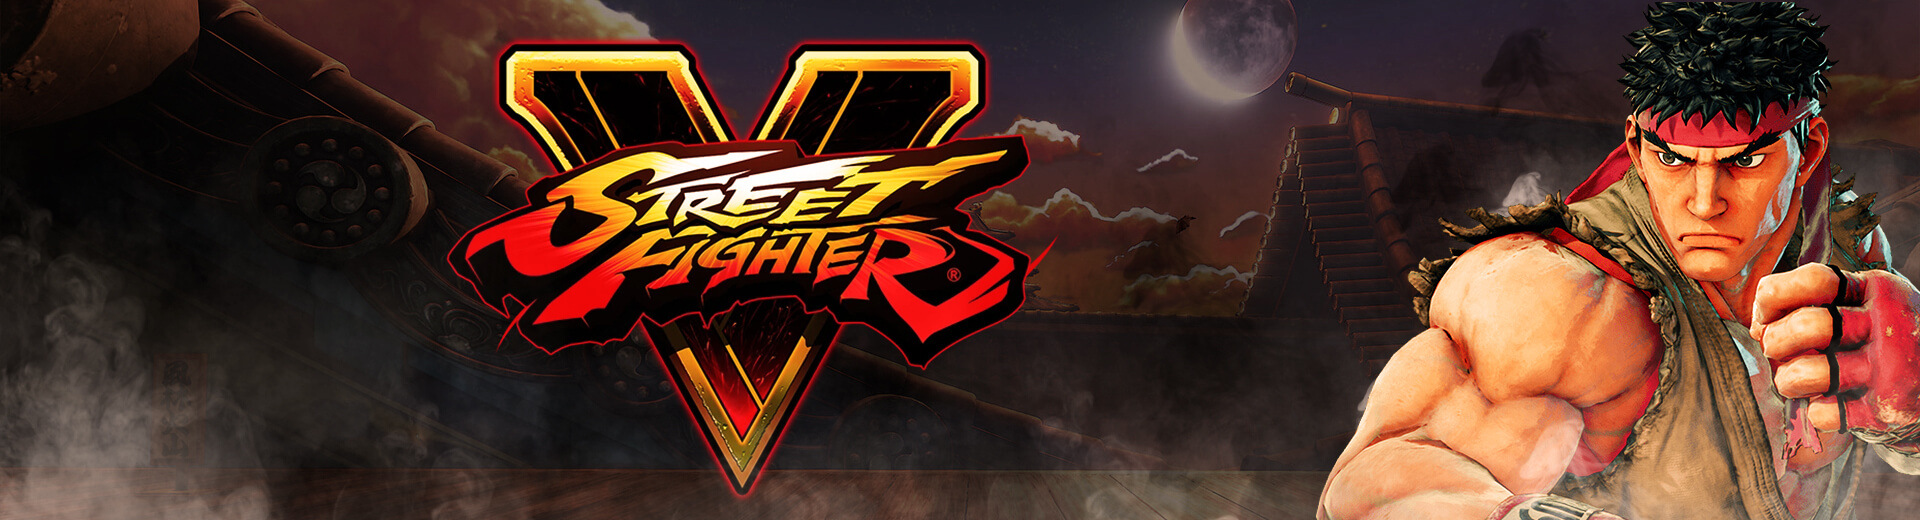 Fight For Freedom 1 - Street Fighter V